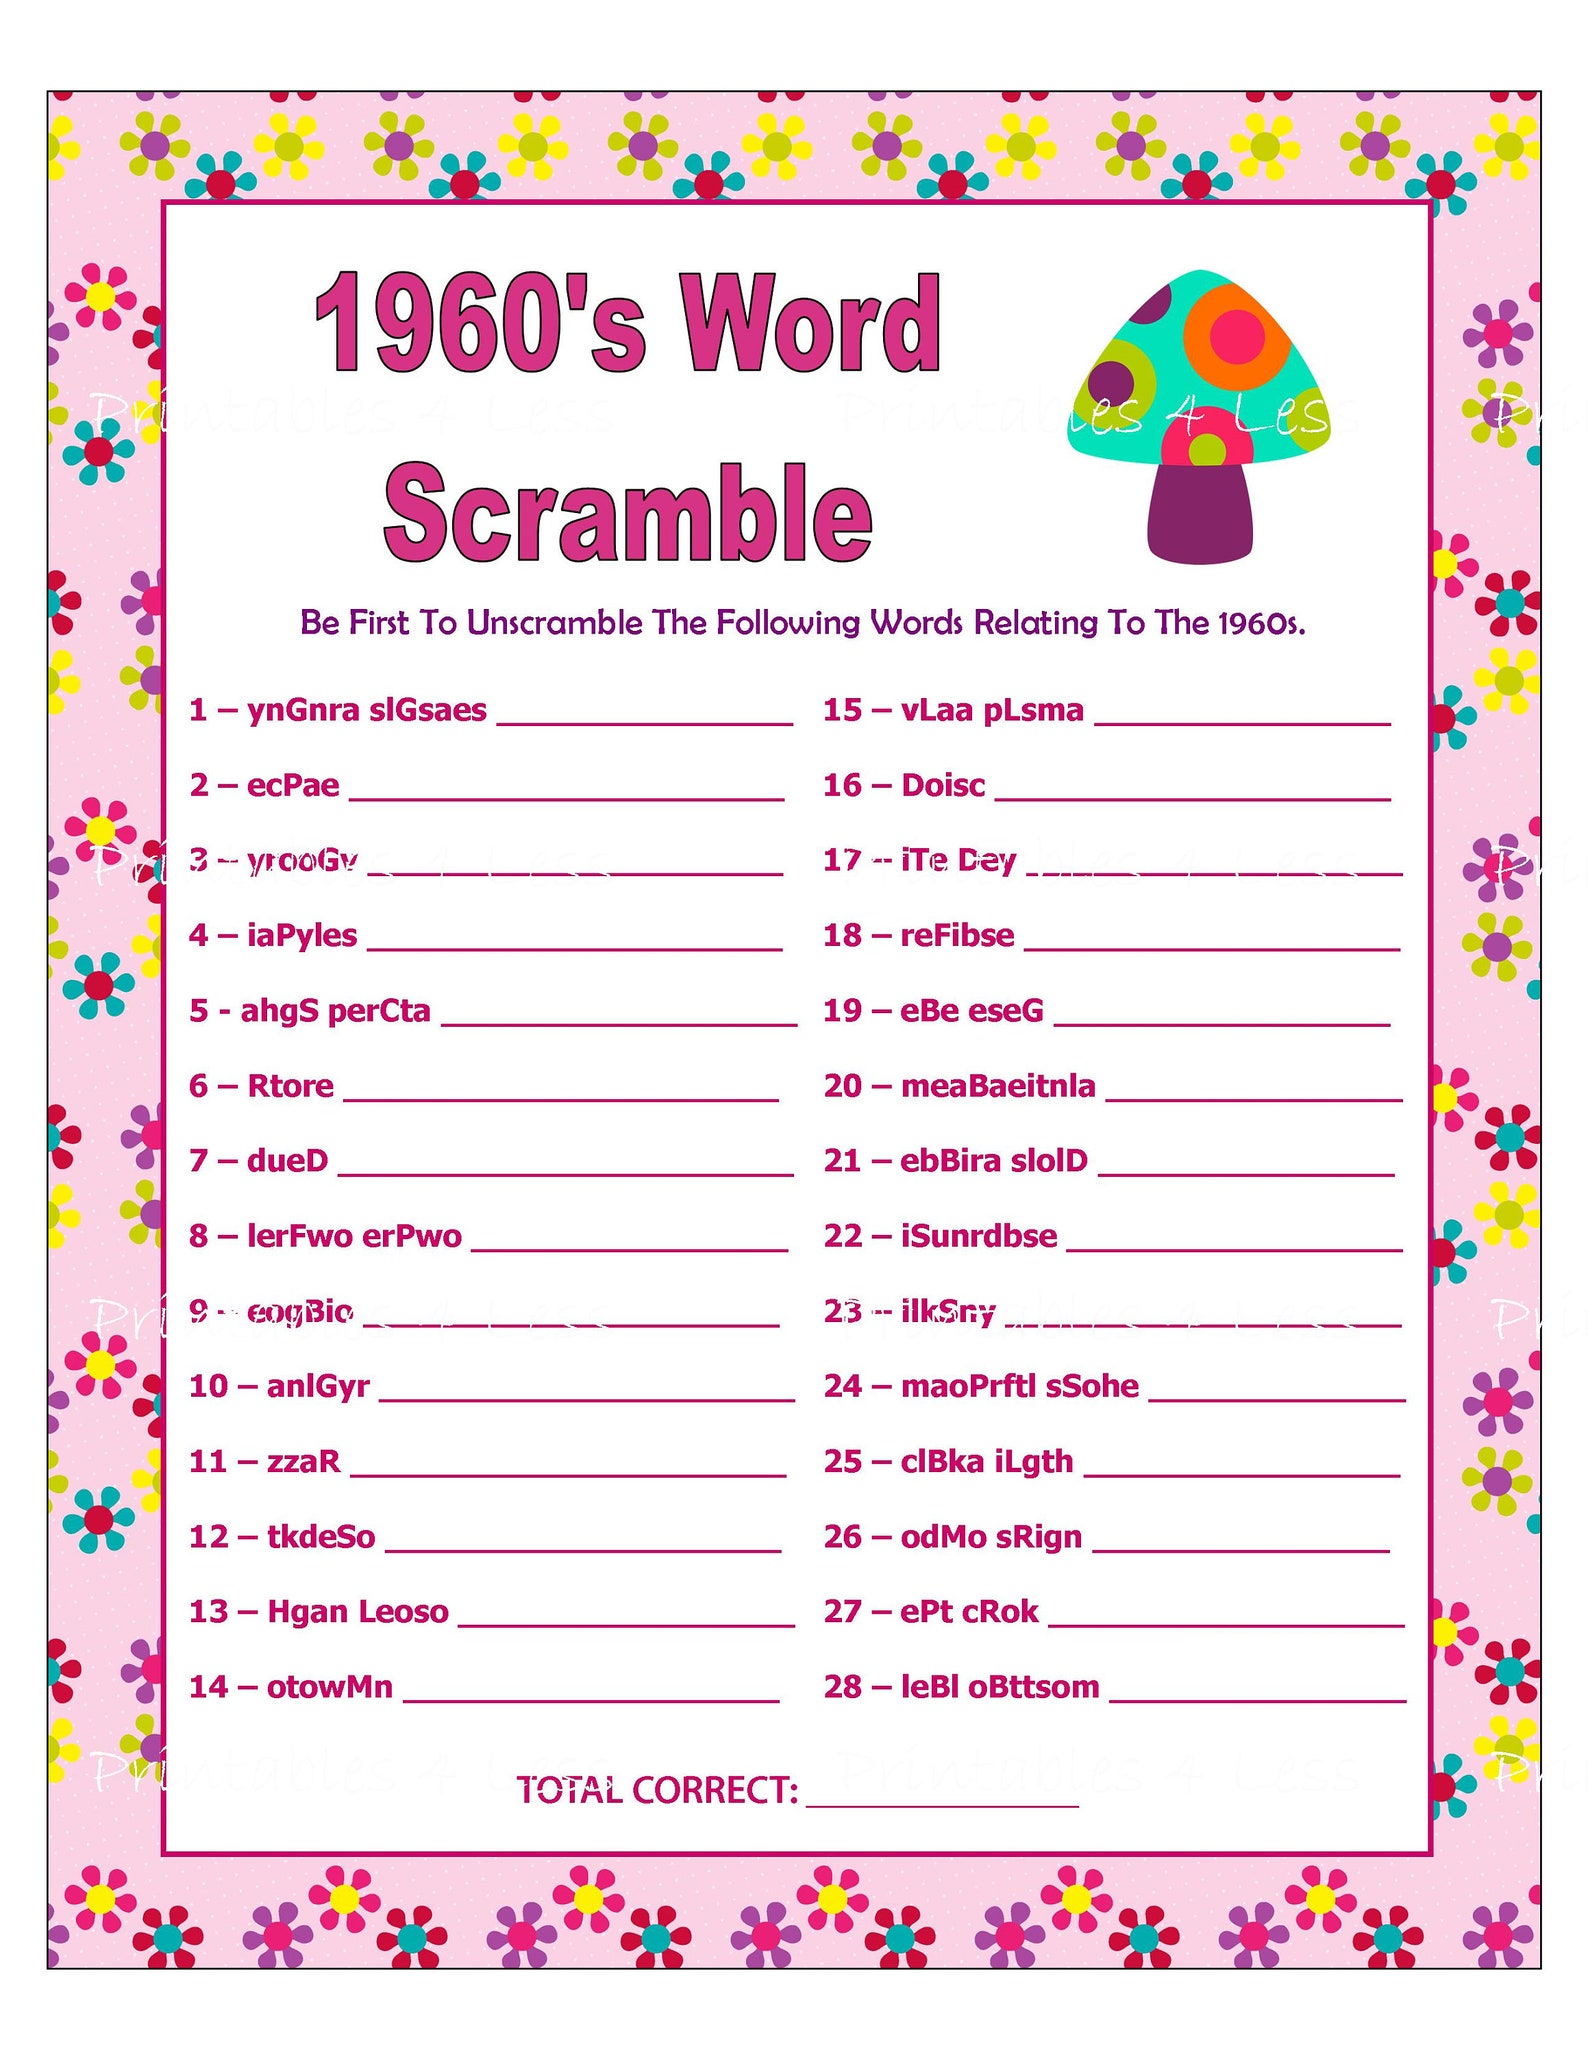 1960s-word-scramble-game-retro-party-game-diy-printable-word-etsy